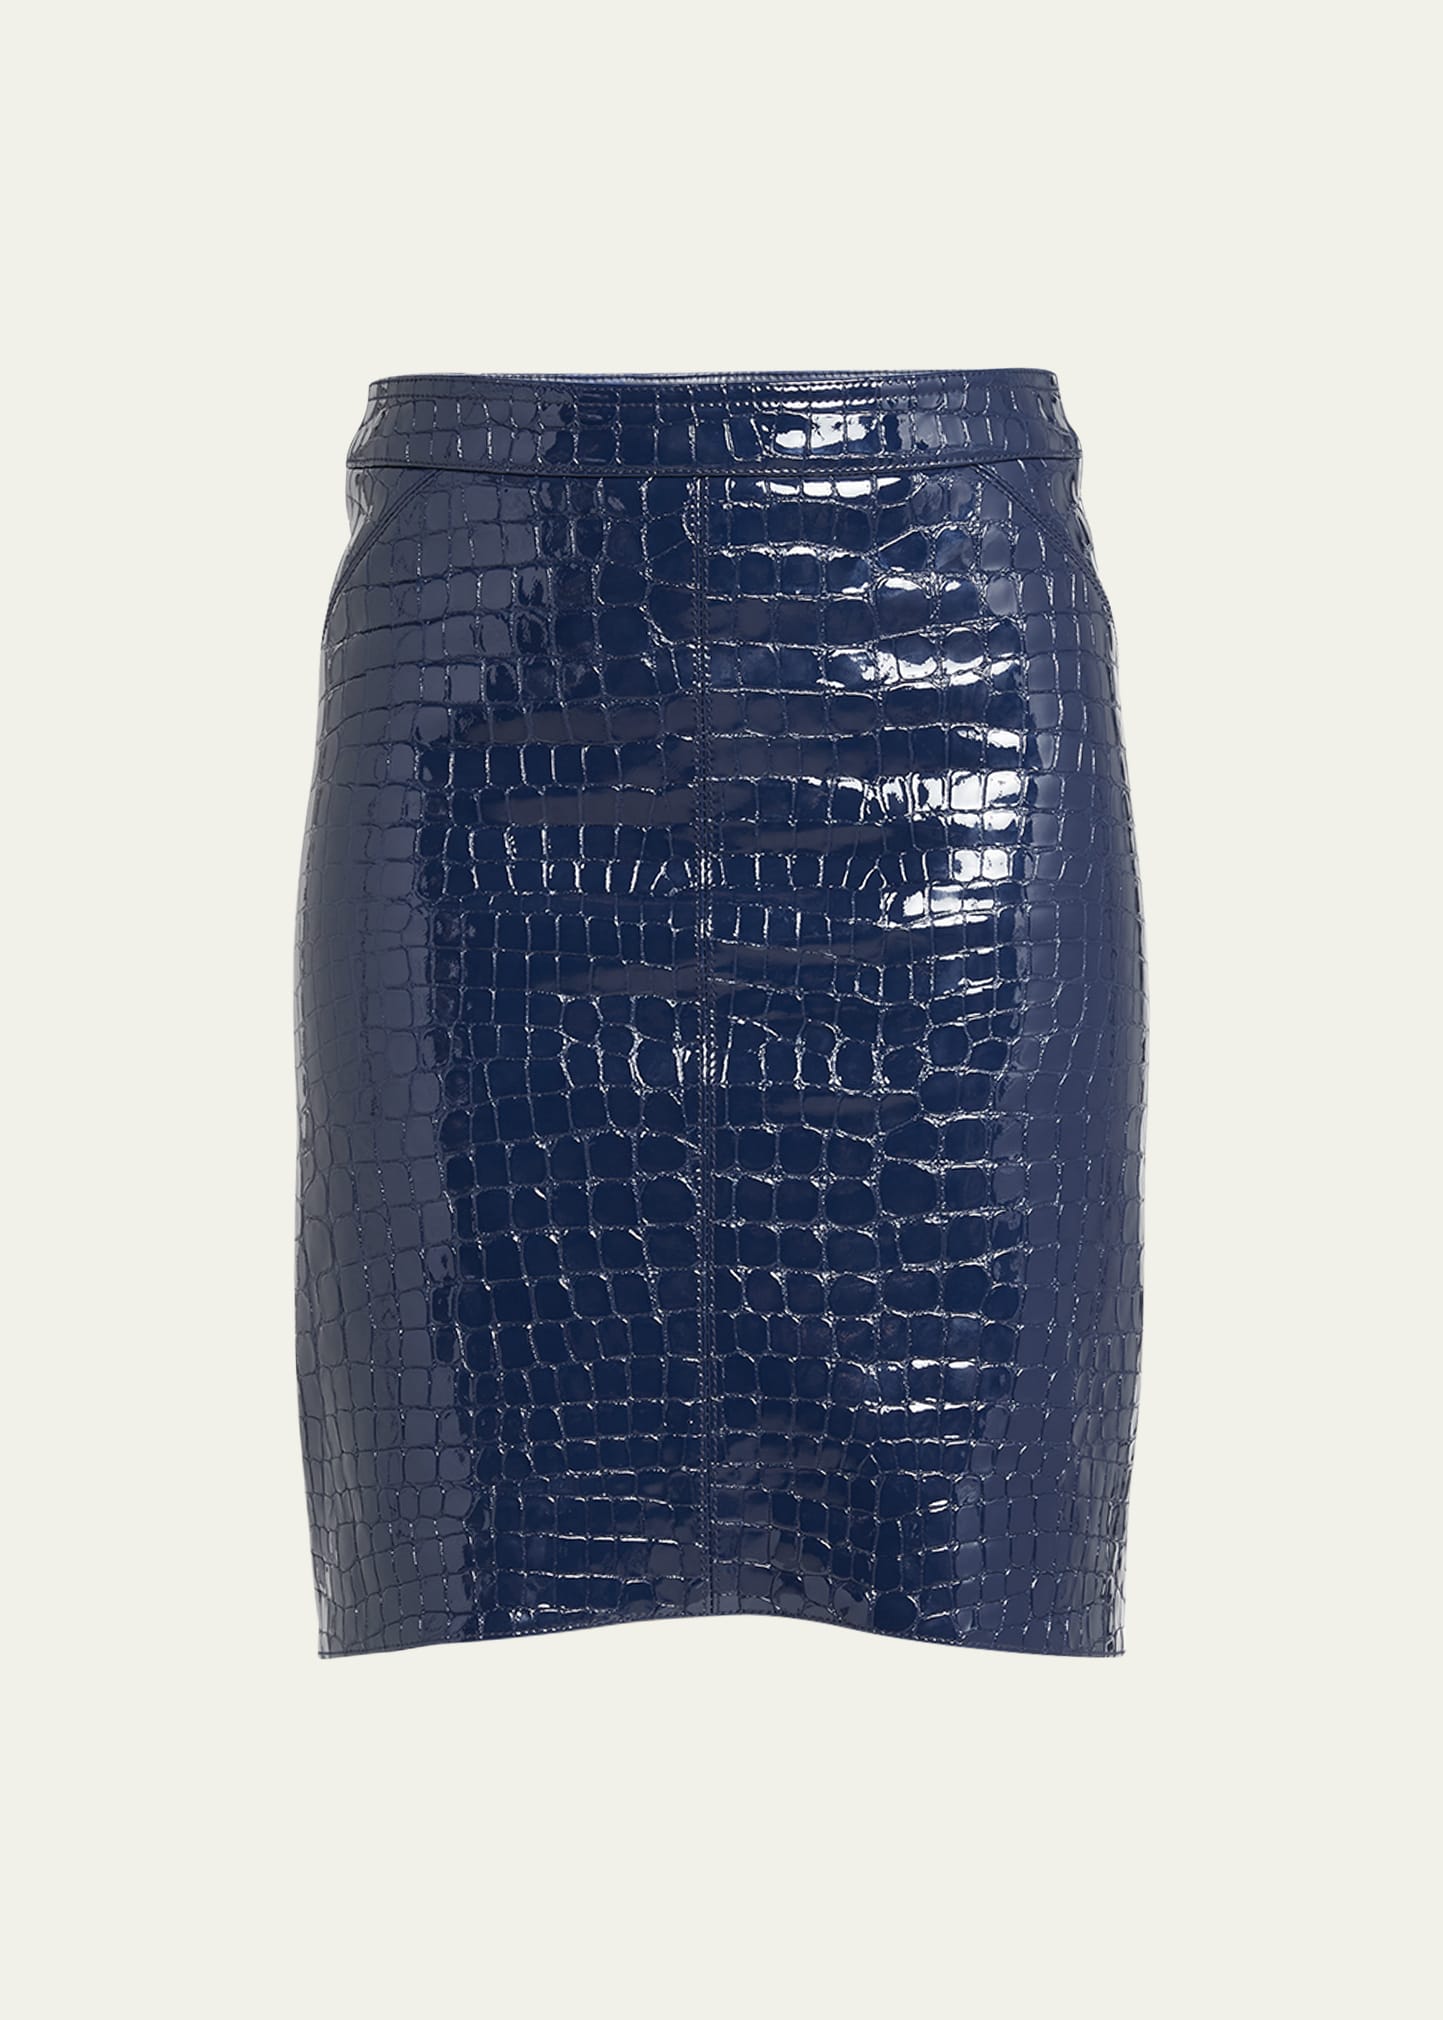 Croc-effect leather pencil skirt